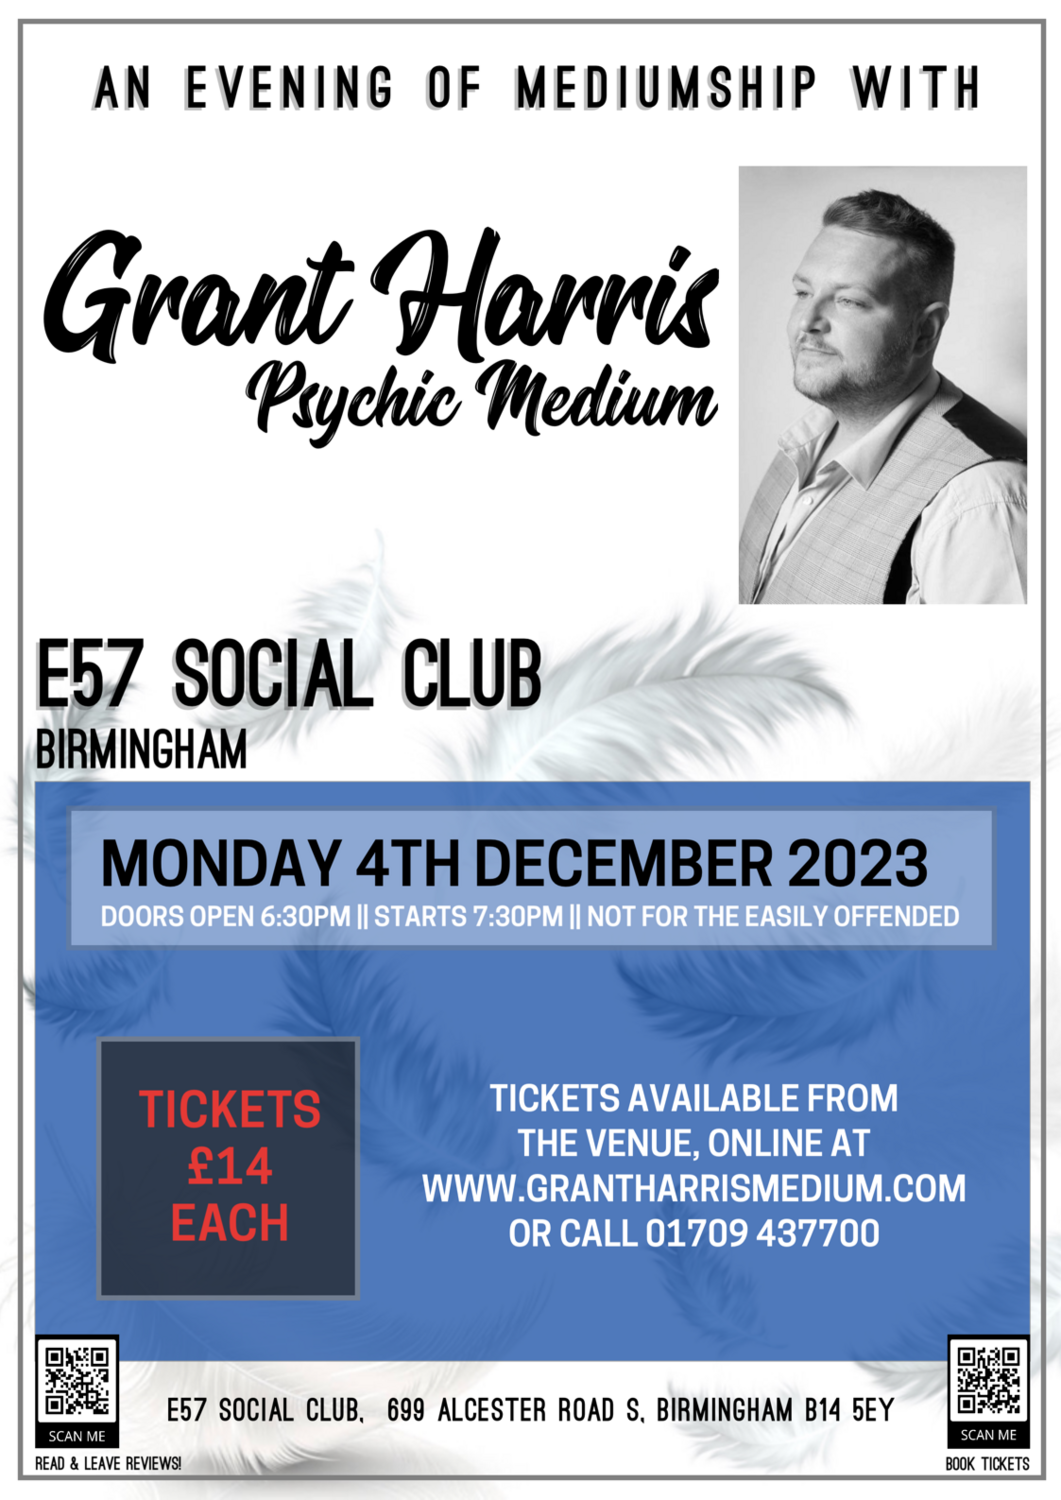 E57 Social Club, Birmingham, Monday 4th December 2023